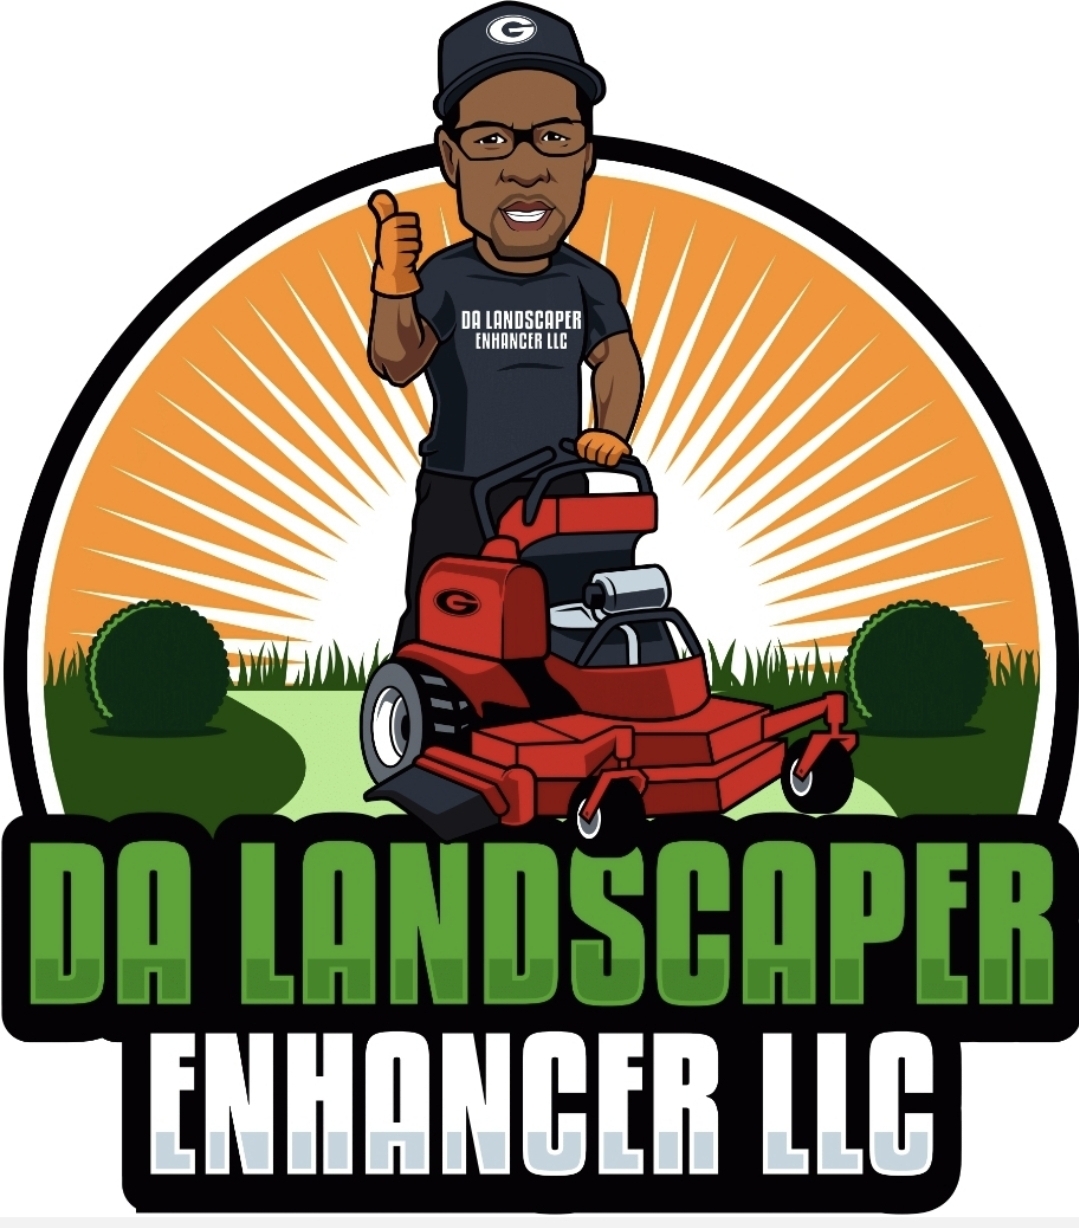 DA Landscaper Enhancer, LLC Logo